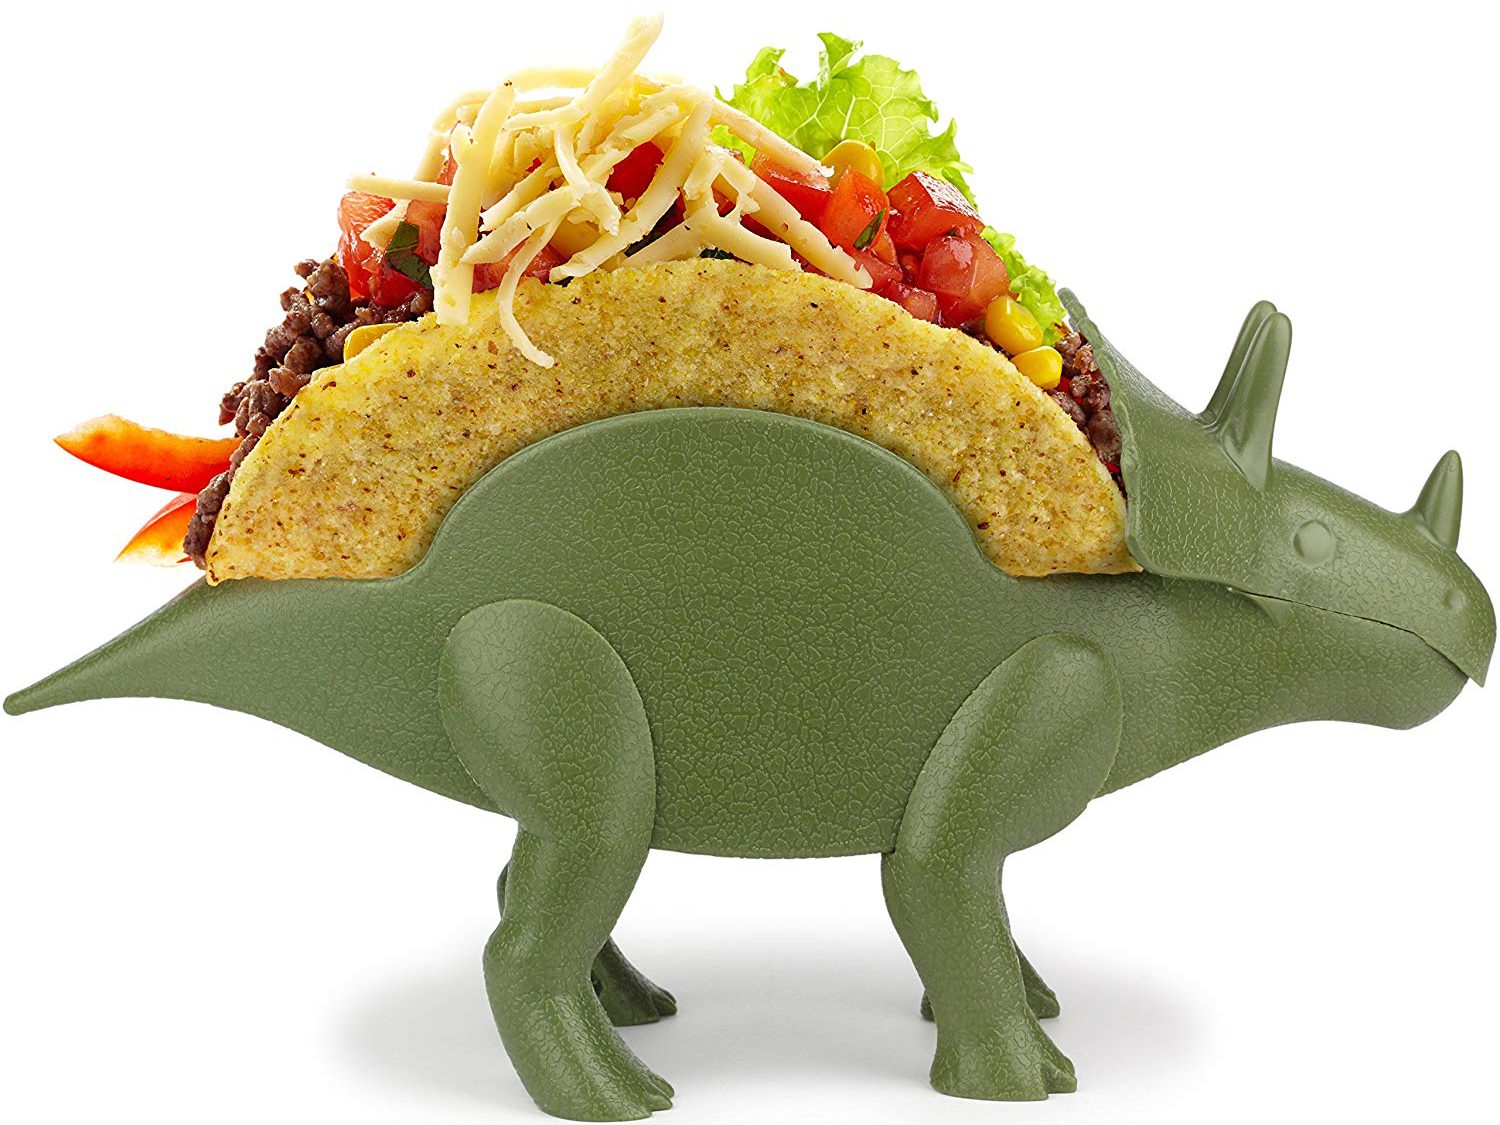 A Taco Holder